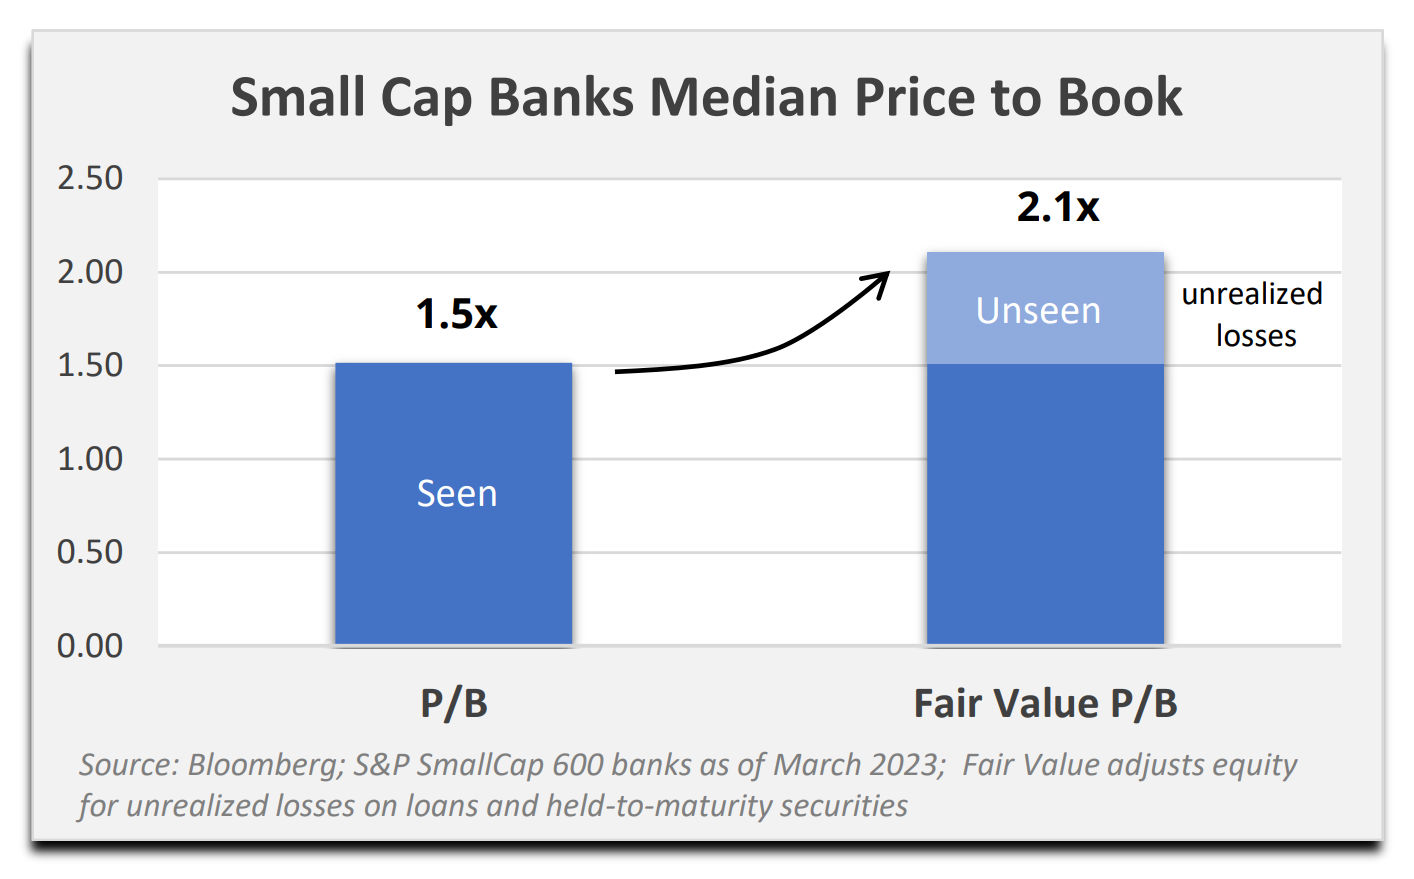 Small Cap Banks